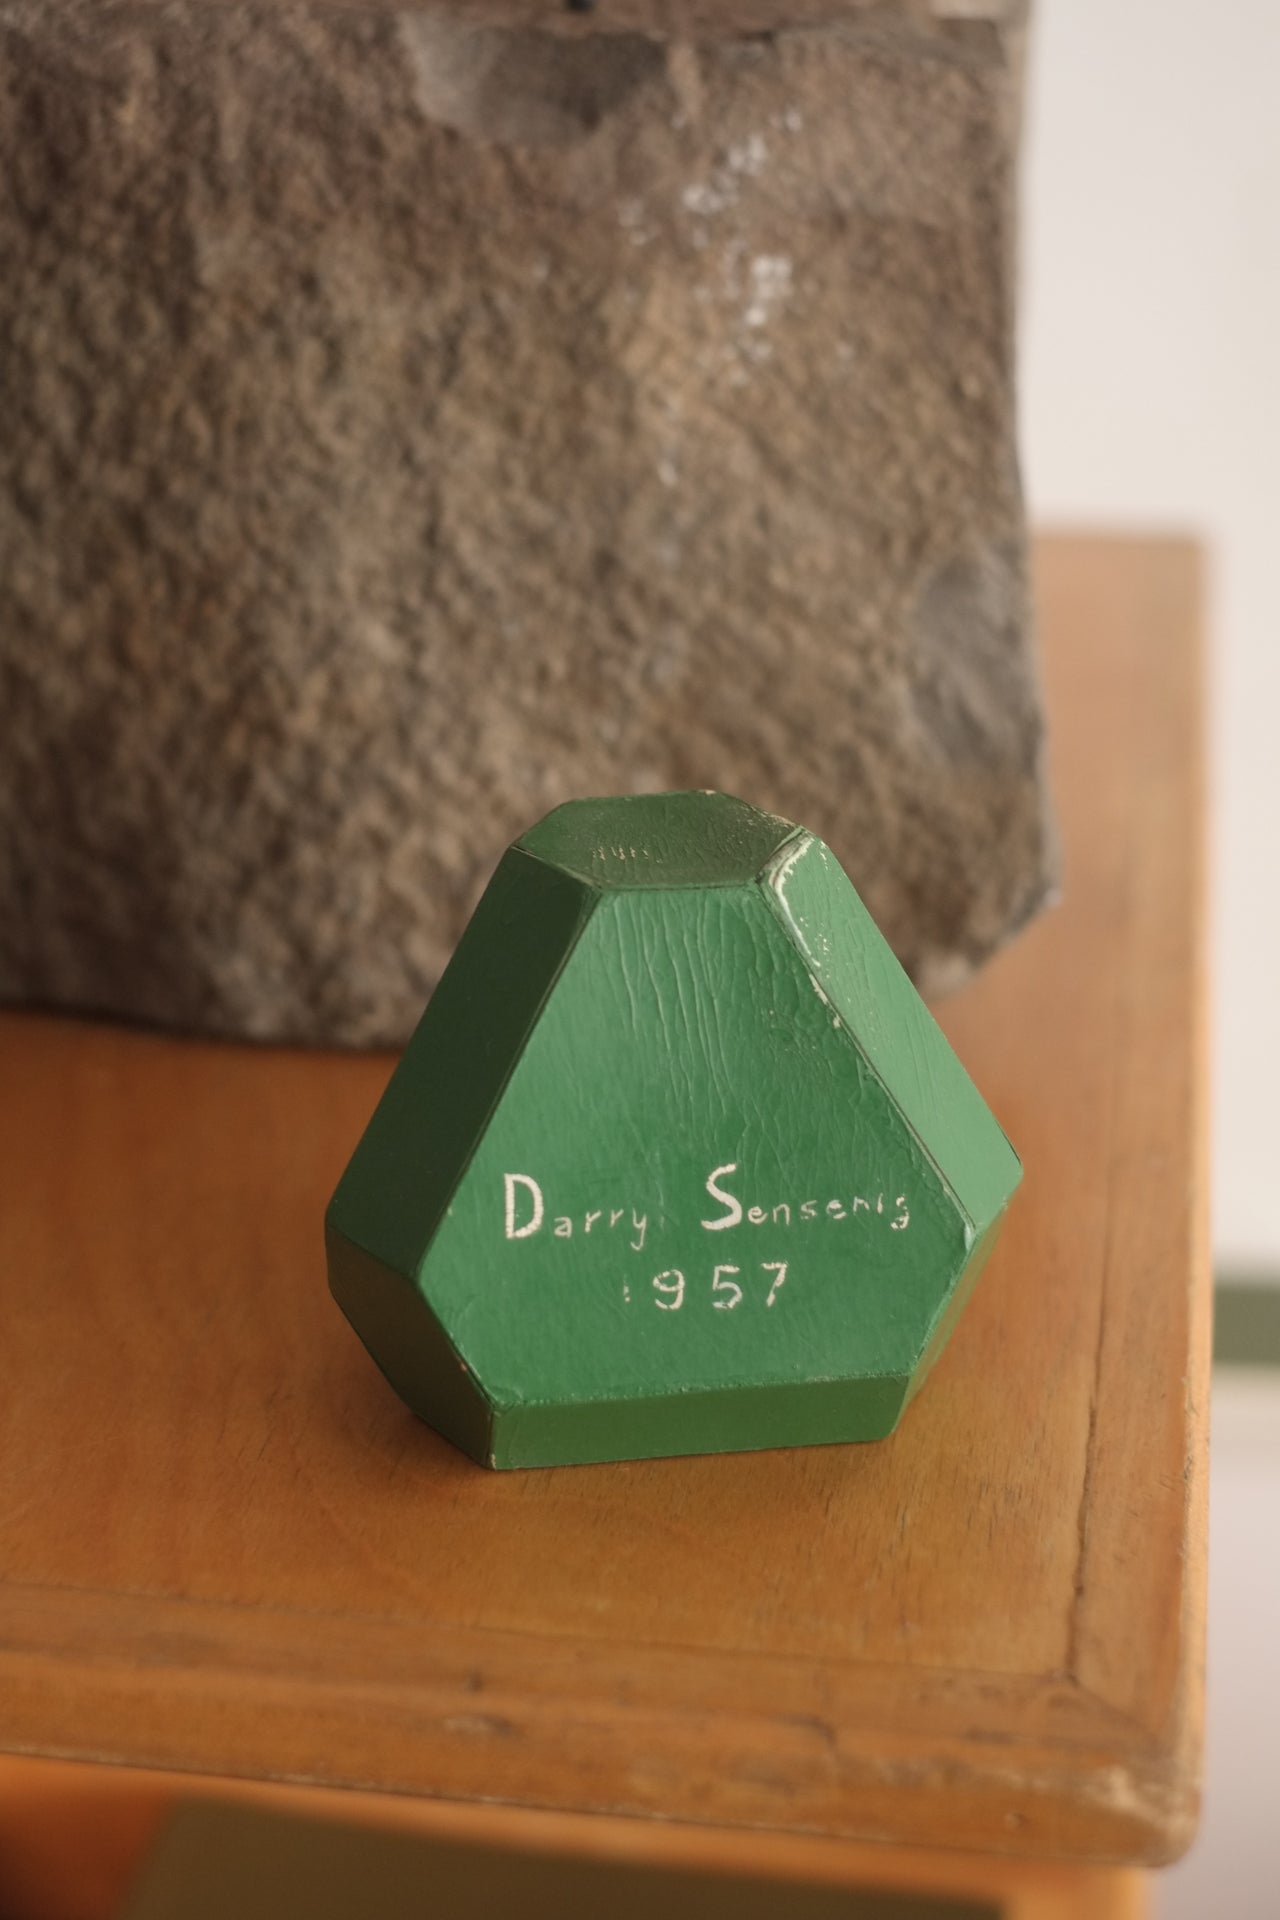 Paper Object by Darryl Sensenig c.1957